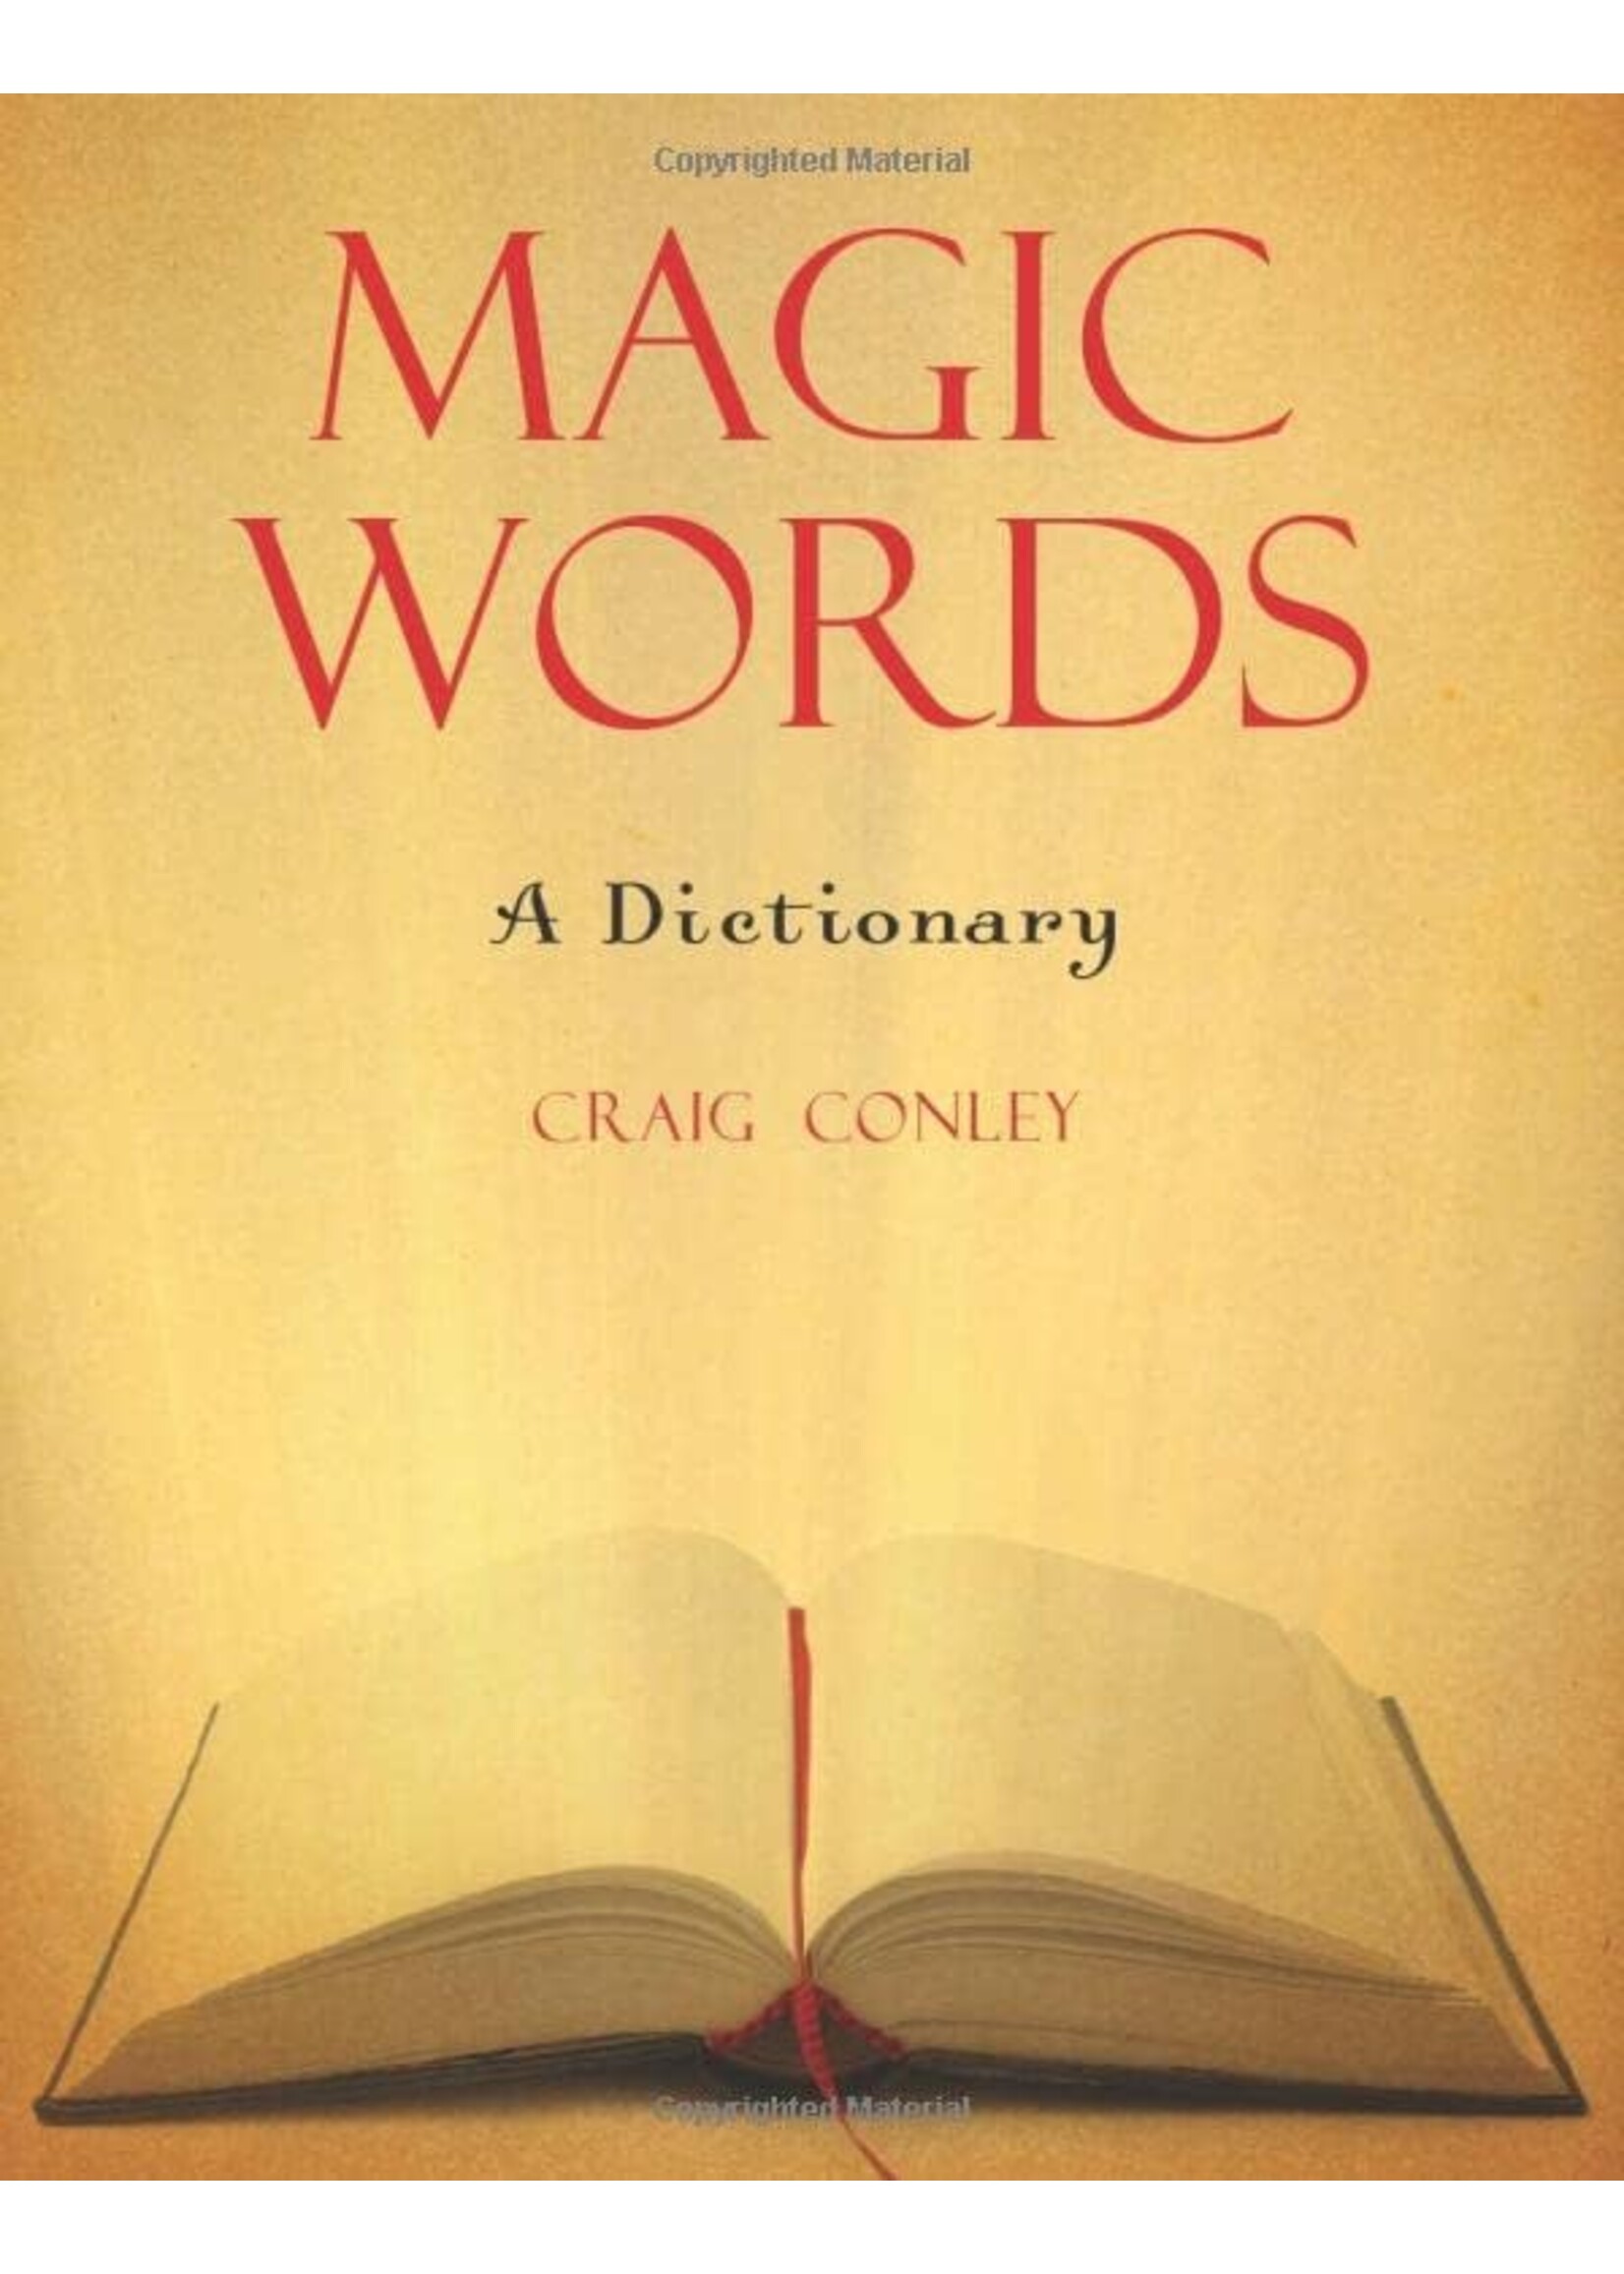 Magic Words by Craig Conley